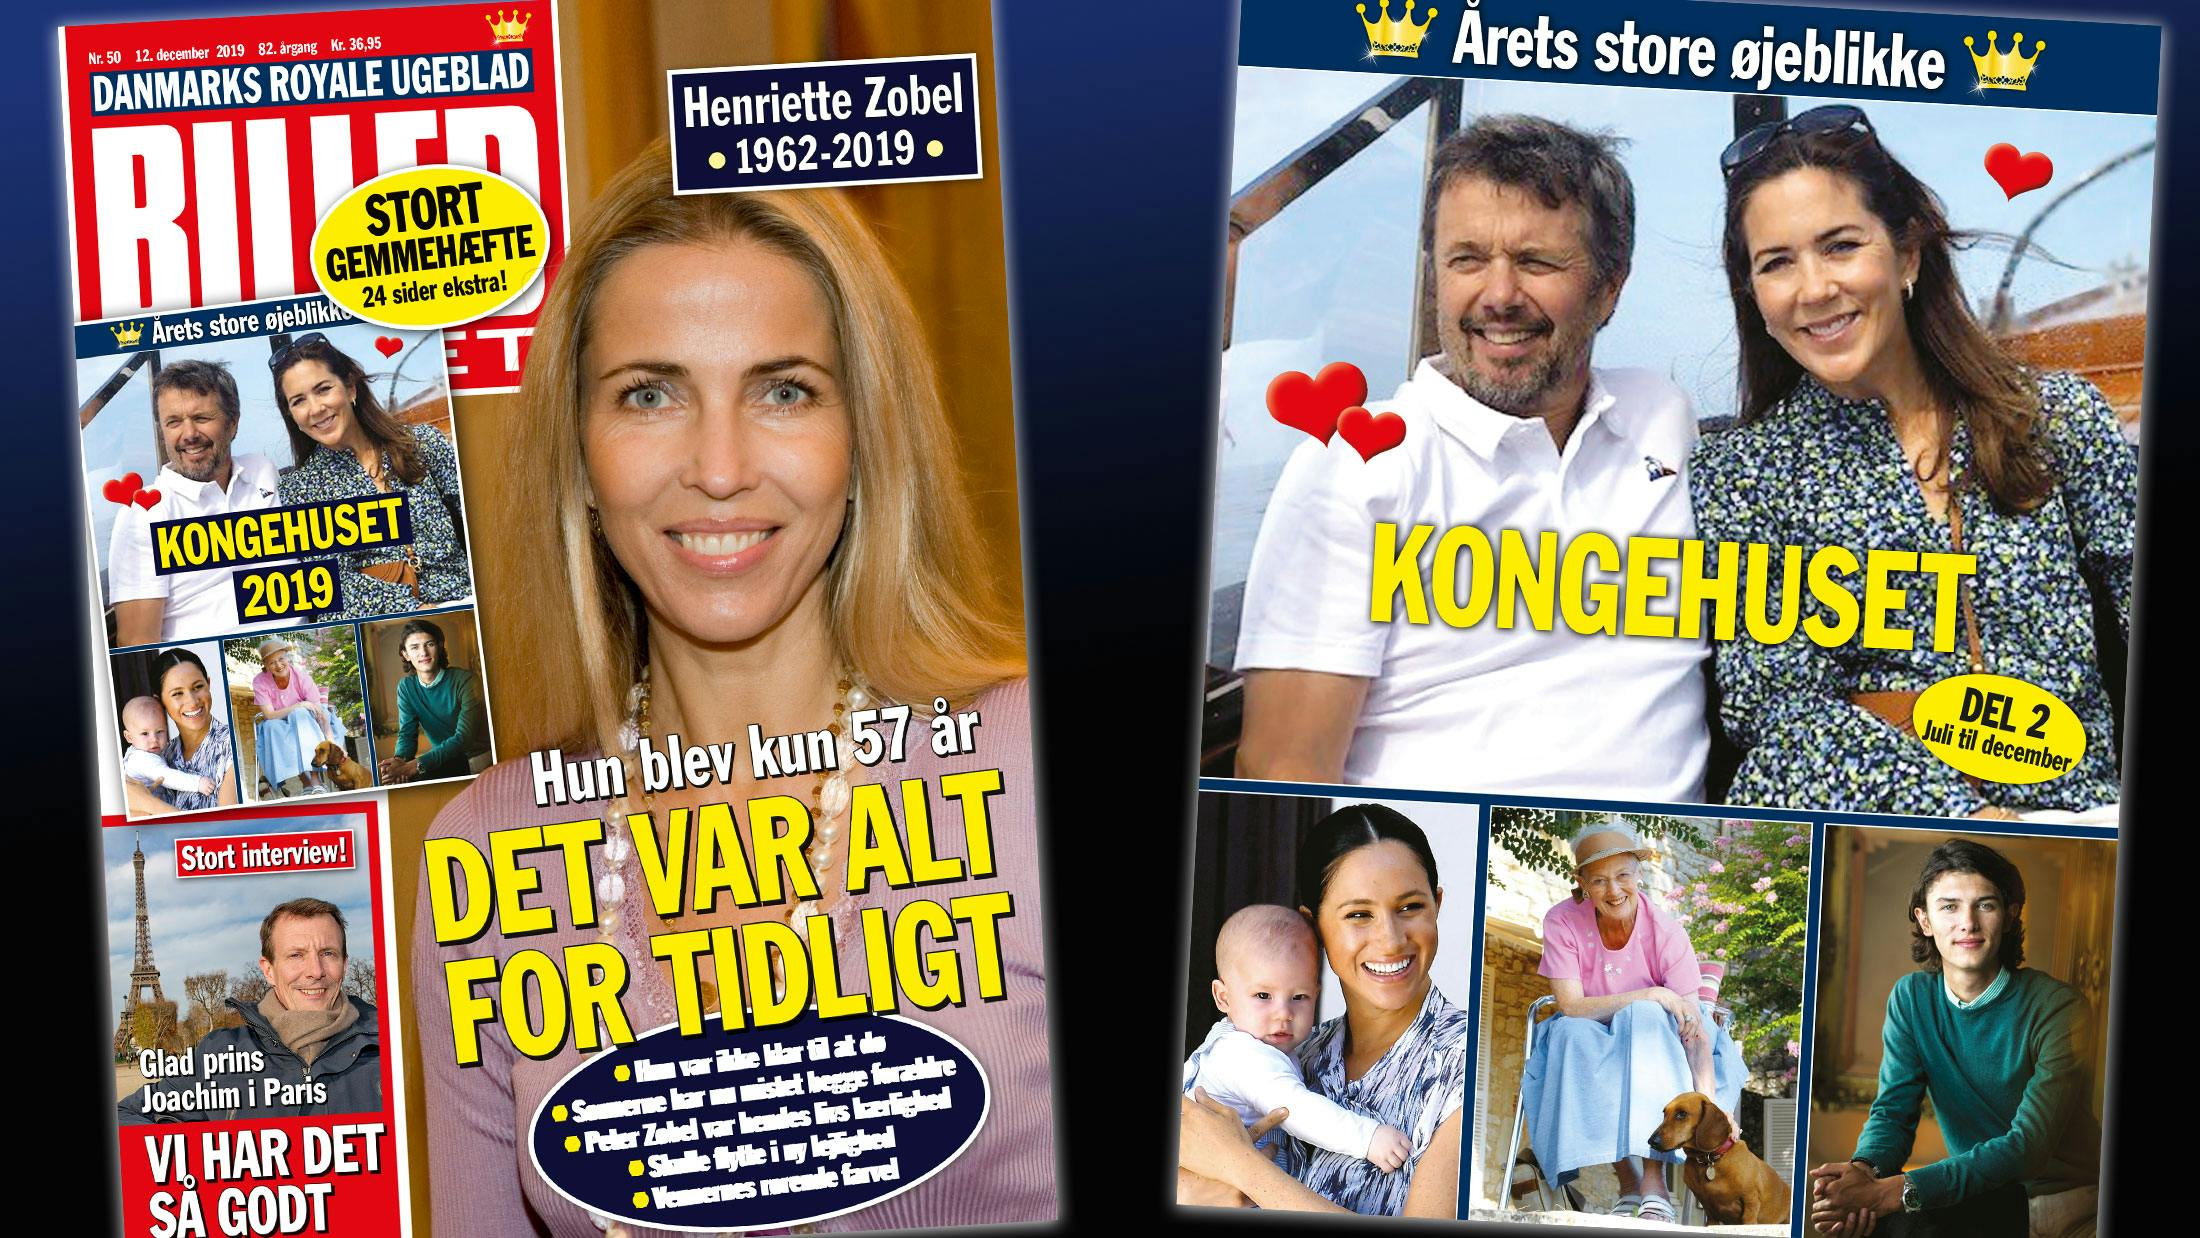 https://imgix.billedbladet.dk/webgrafik_bb50-forsider_1.jpg